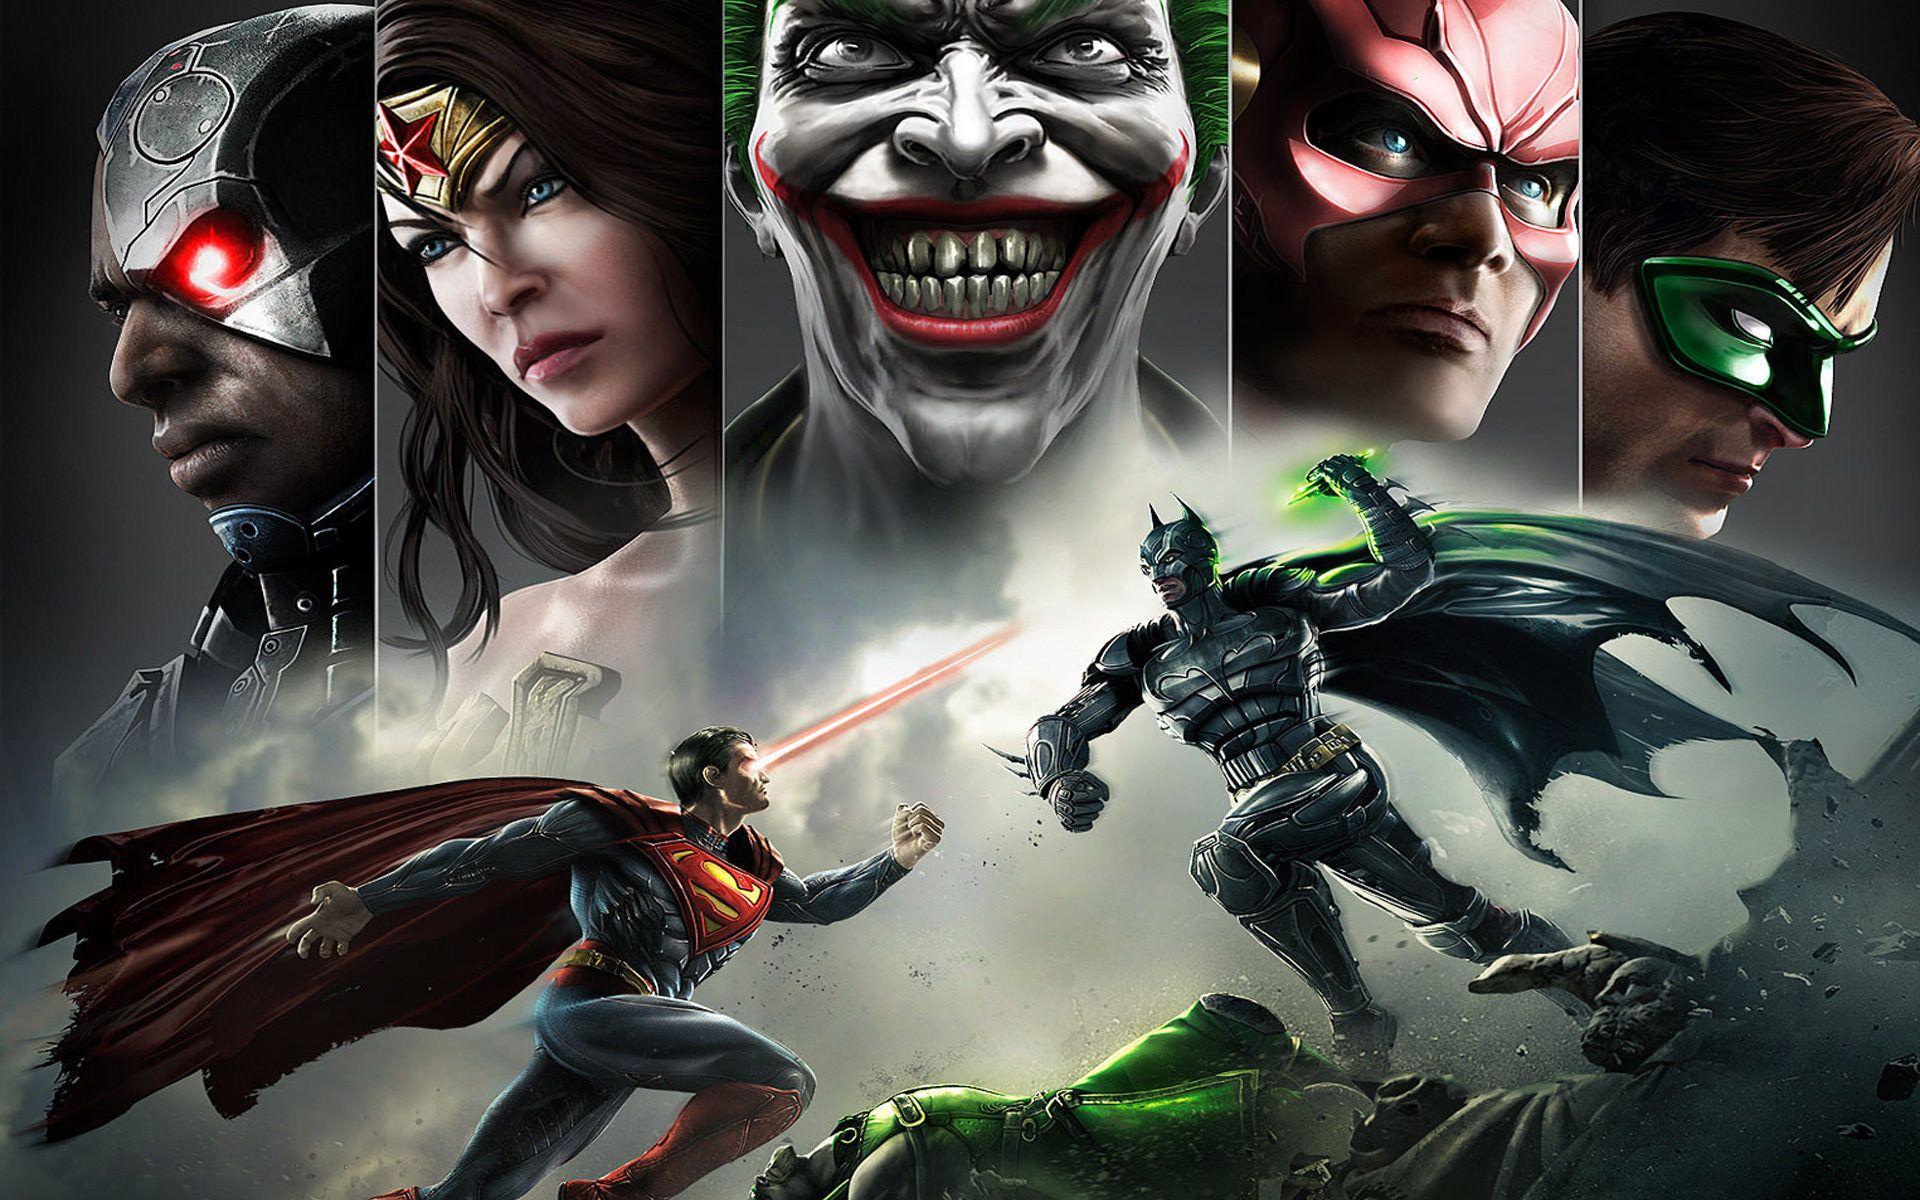 FREE Best HD Superhero Movie Wallpaper in PSD